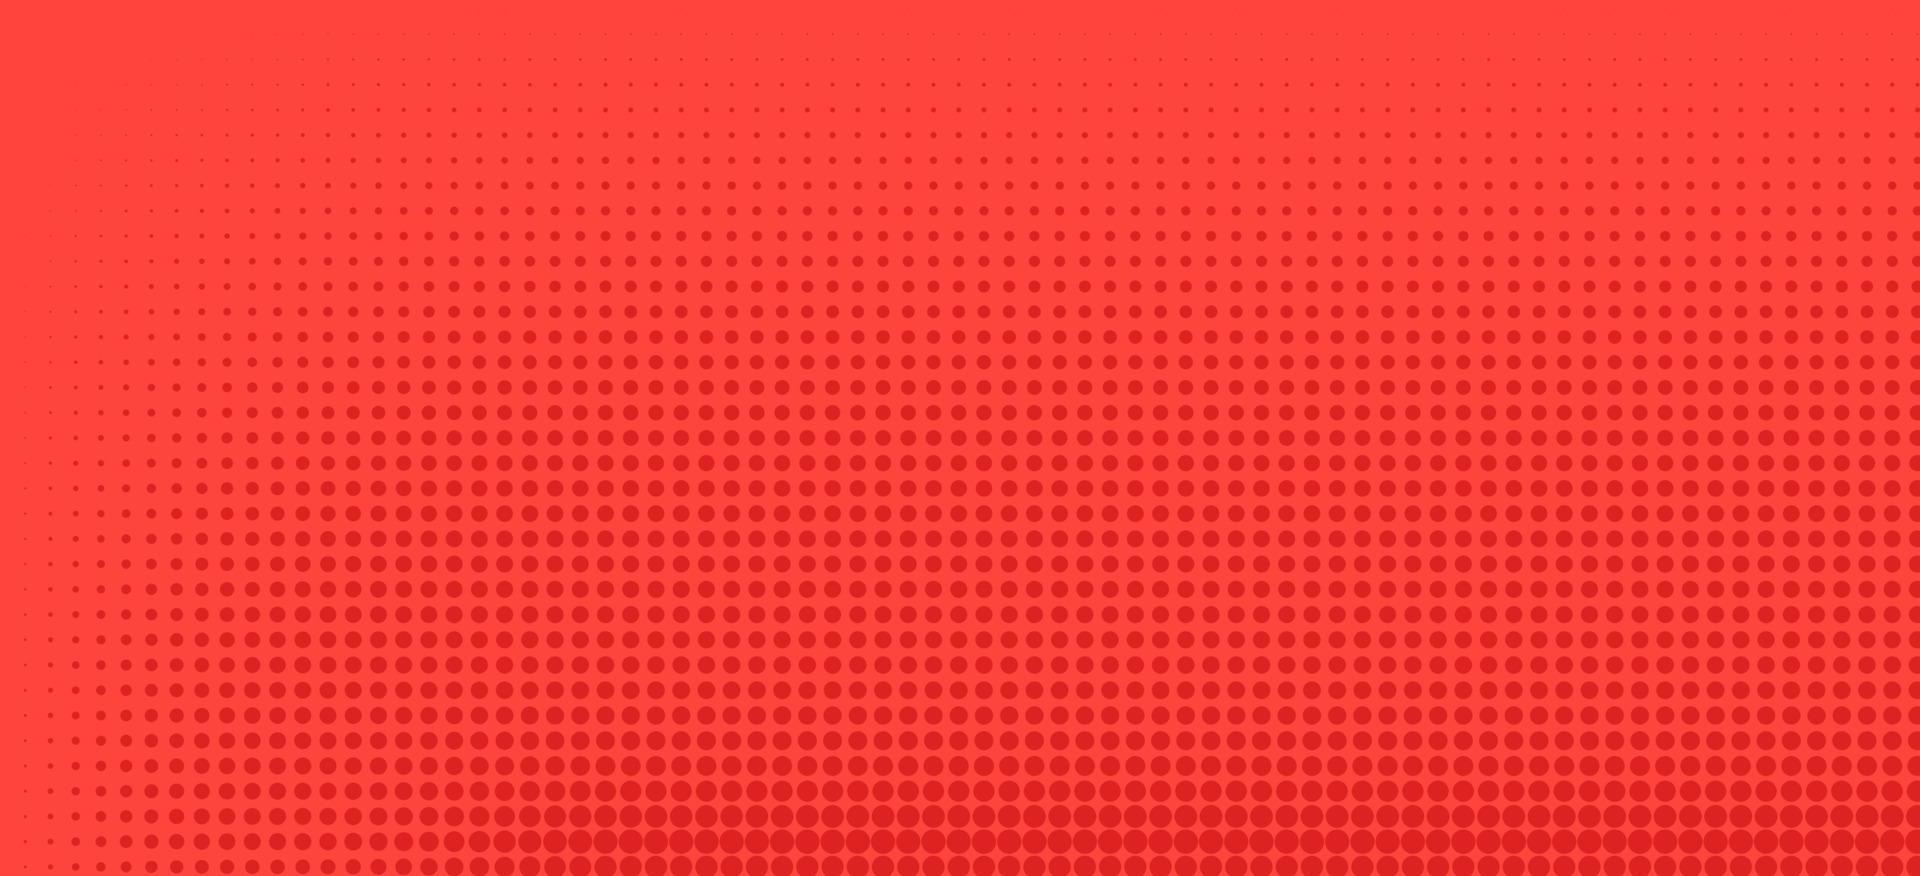 halvton i abstrakt stil. geometriska retro banner vektor konsistens. modernt tryck. röd bakgrund. ljuseffekt